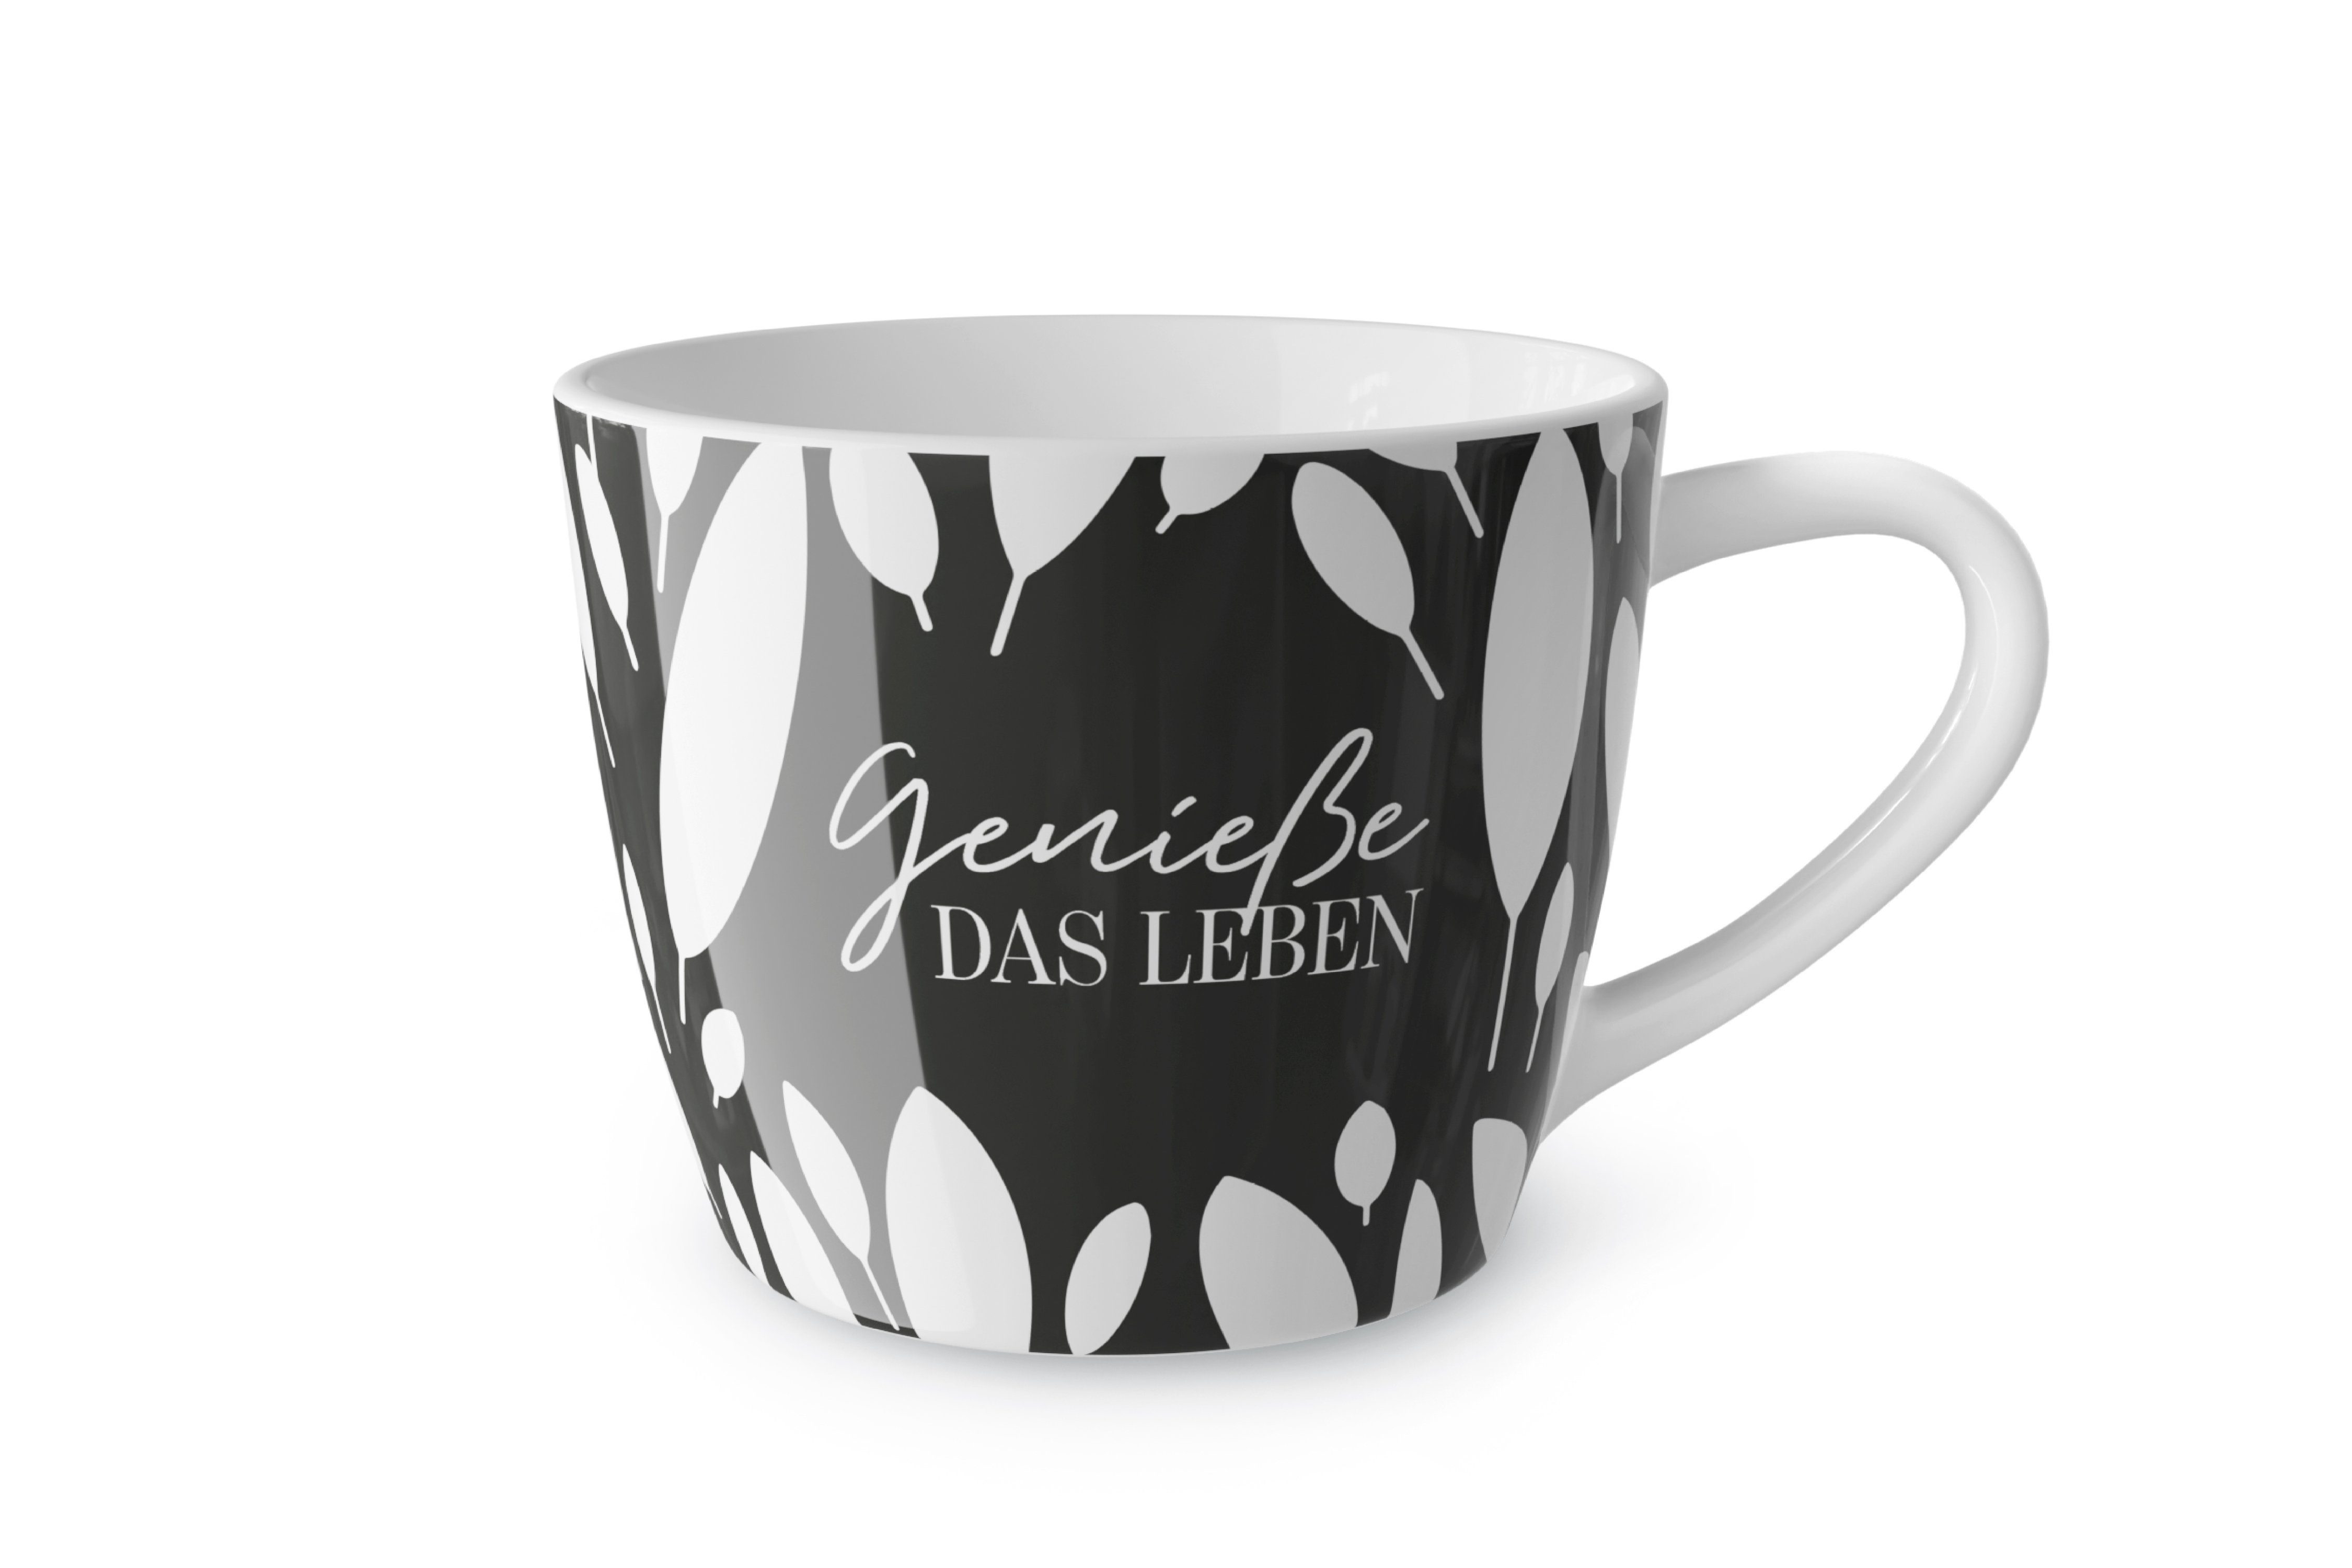 La Vida Teetasse Porzellan für "Geniesse, la Tasse dich Material: vida Tasse Becher Maxi Kaffeetasse